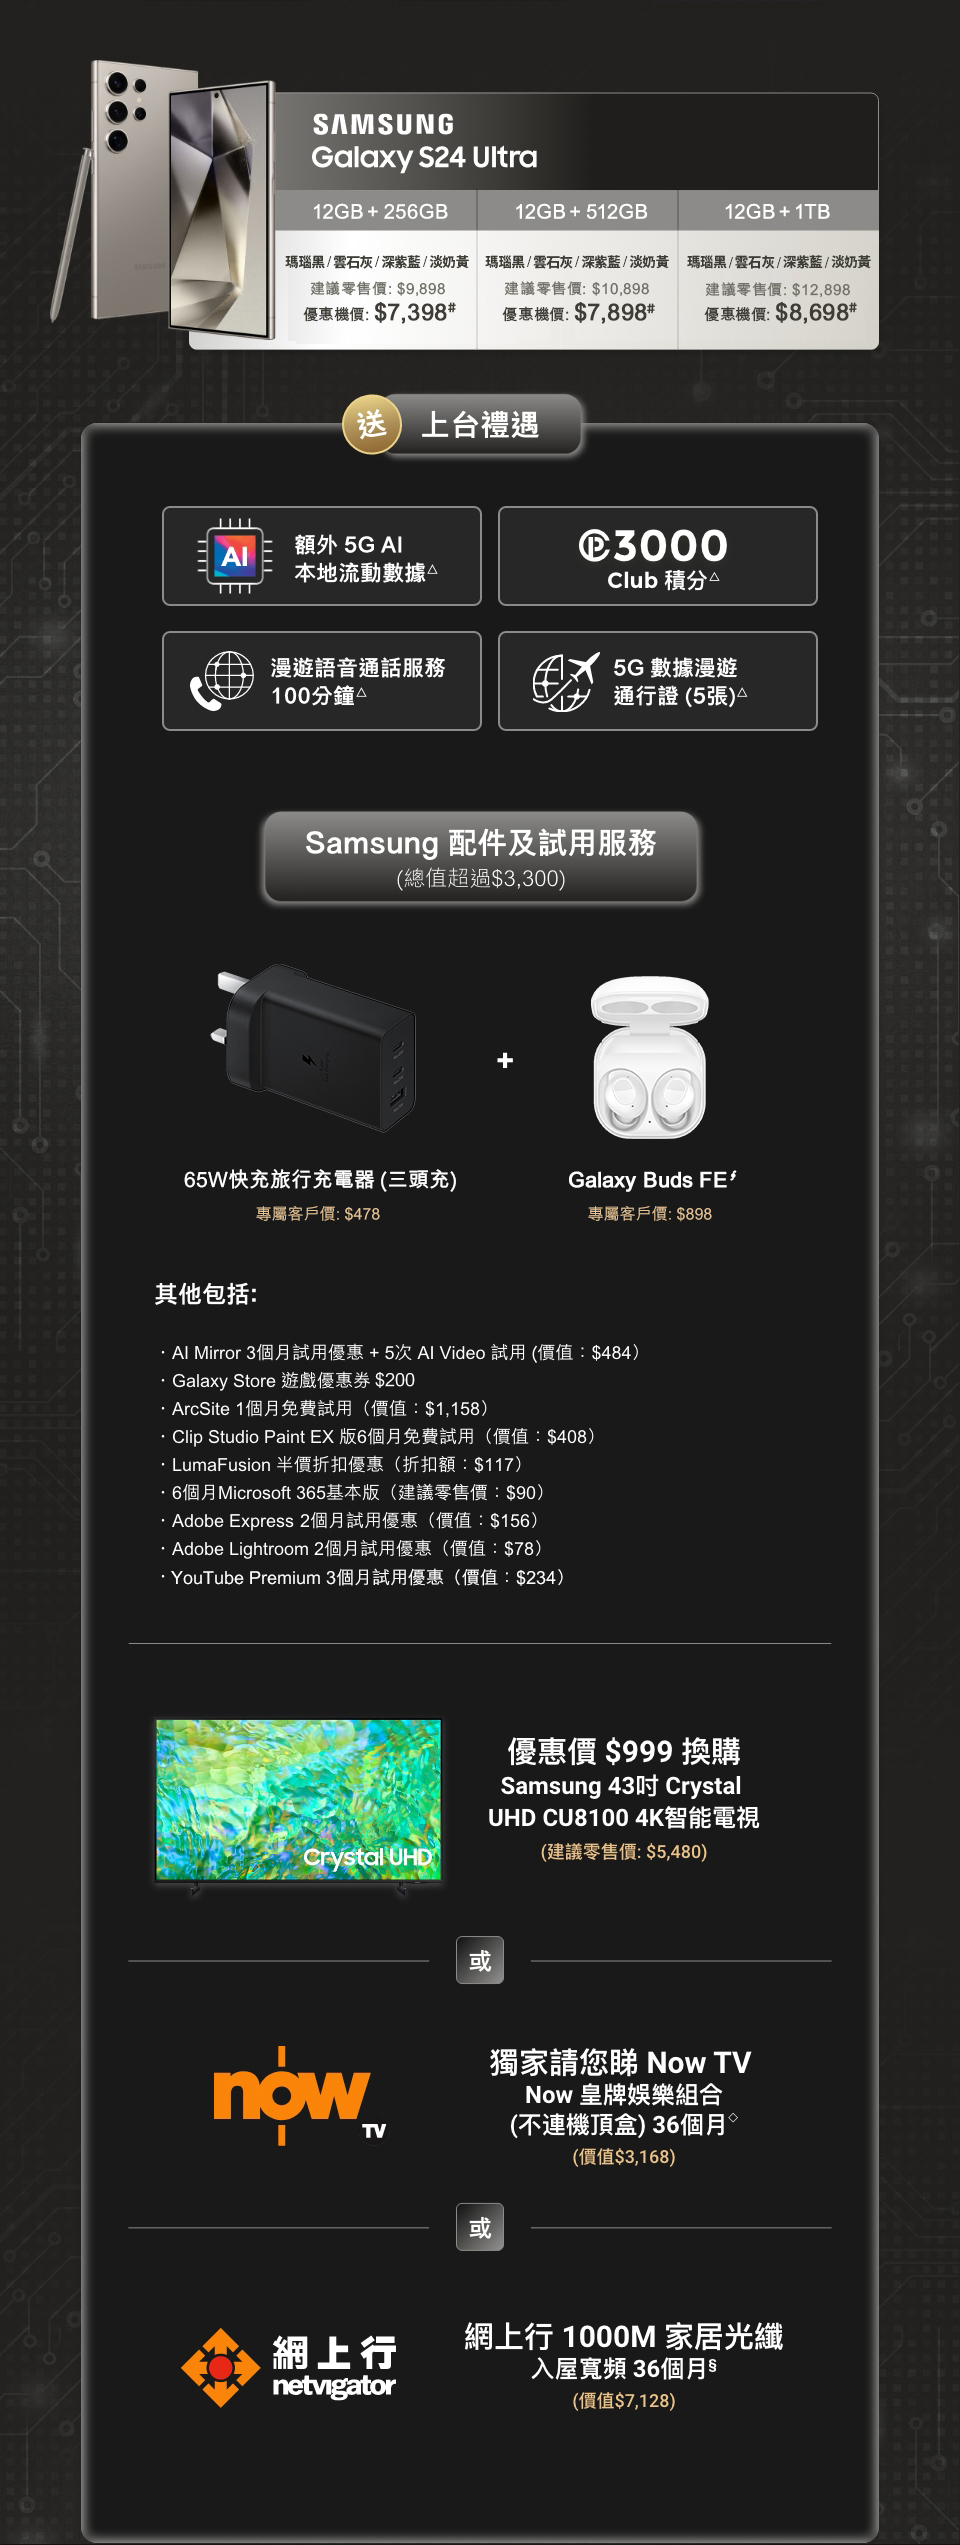 5G 客戶優惠 Galaxy S24 Ultra